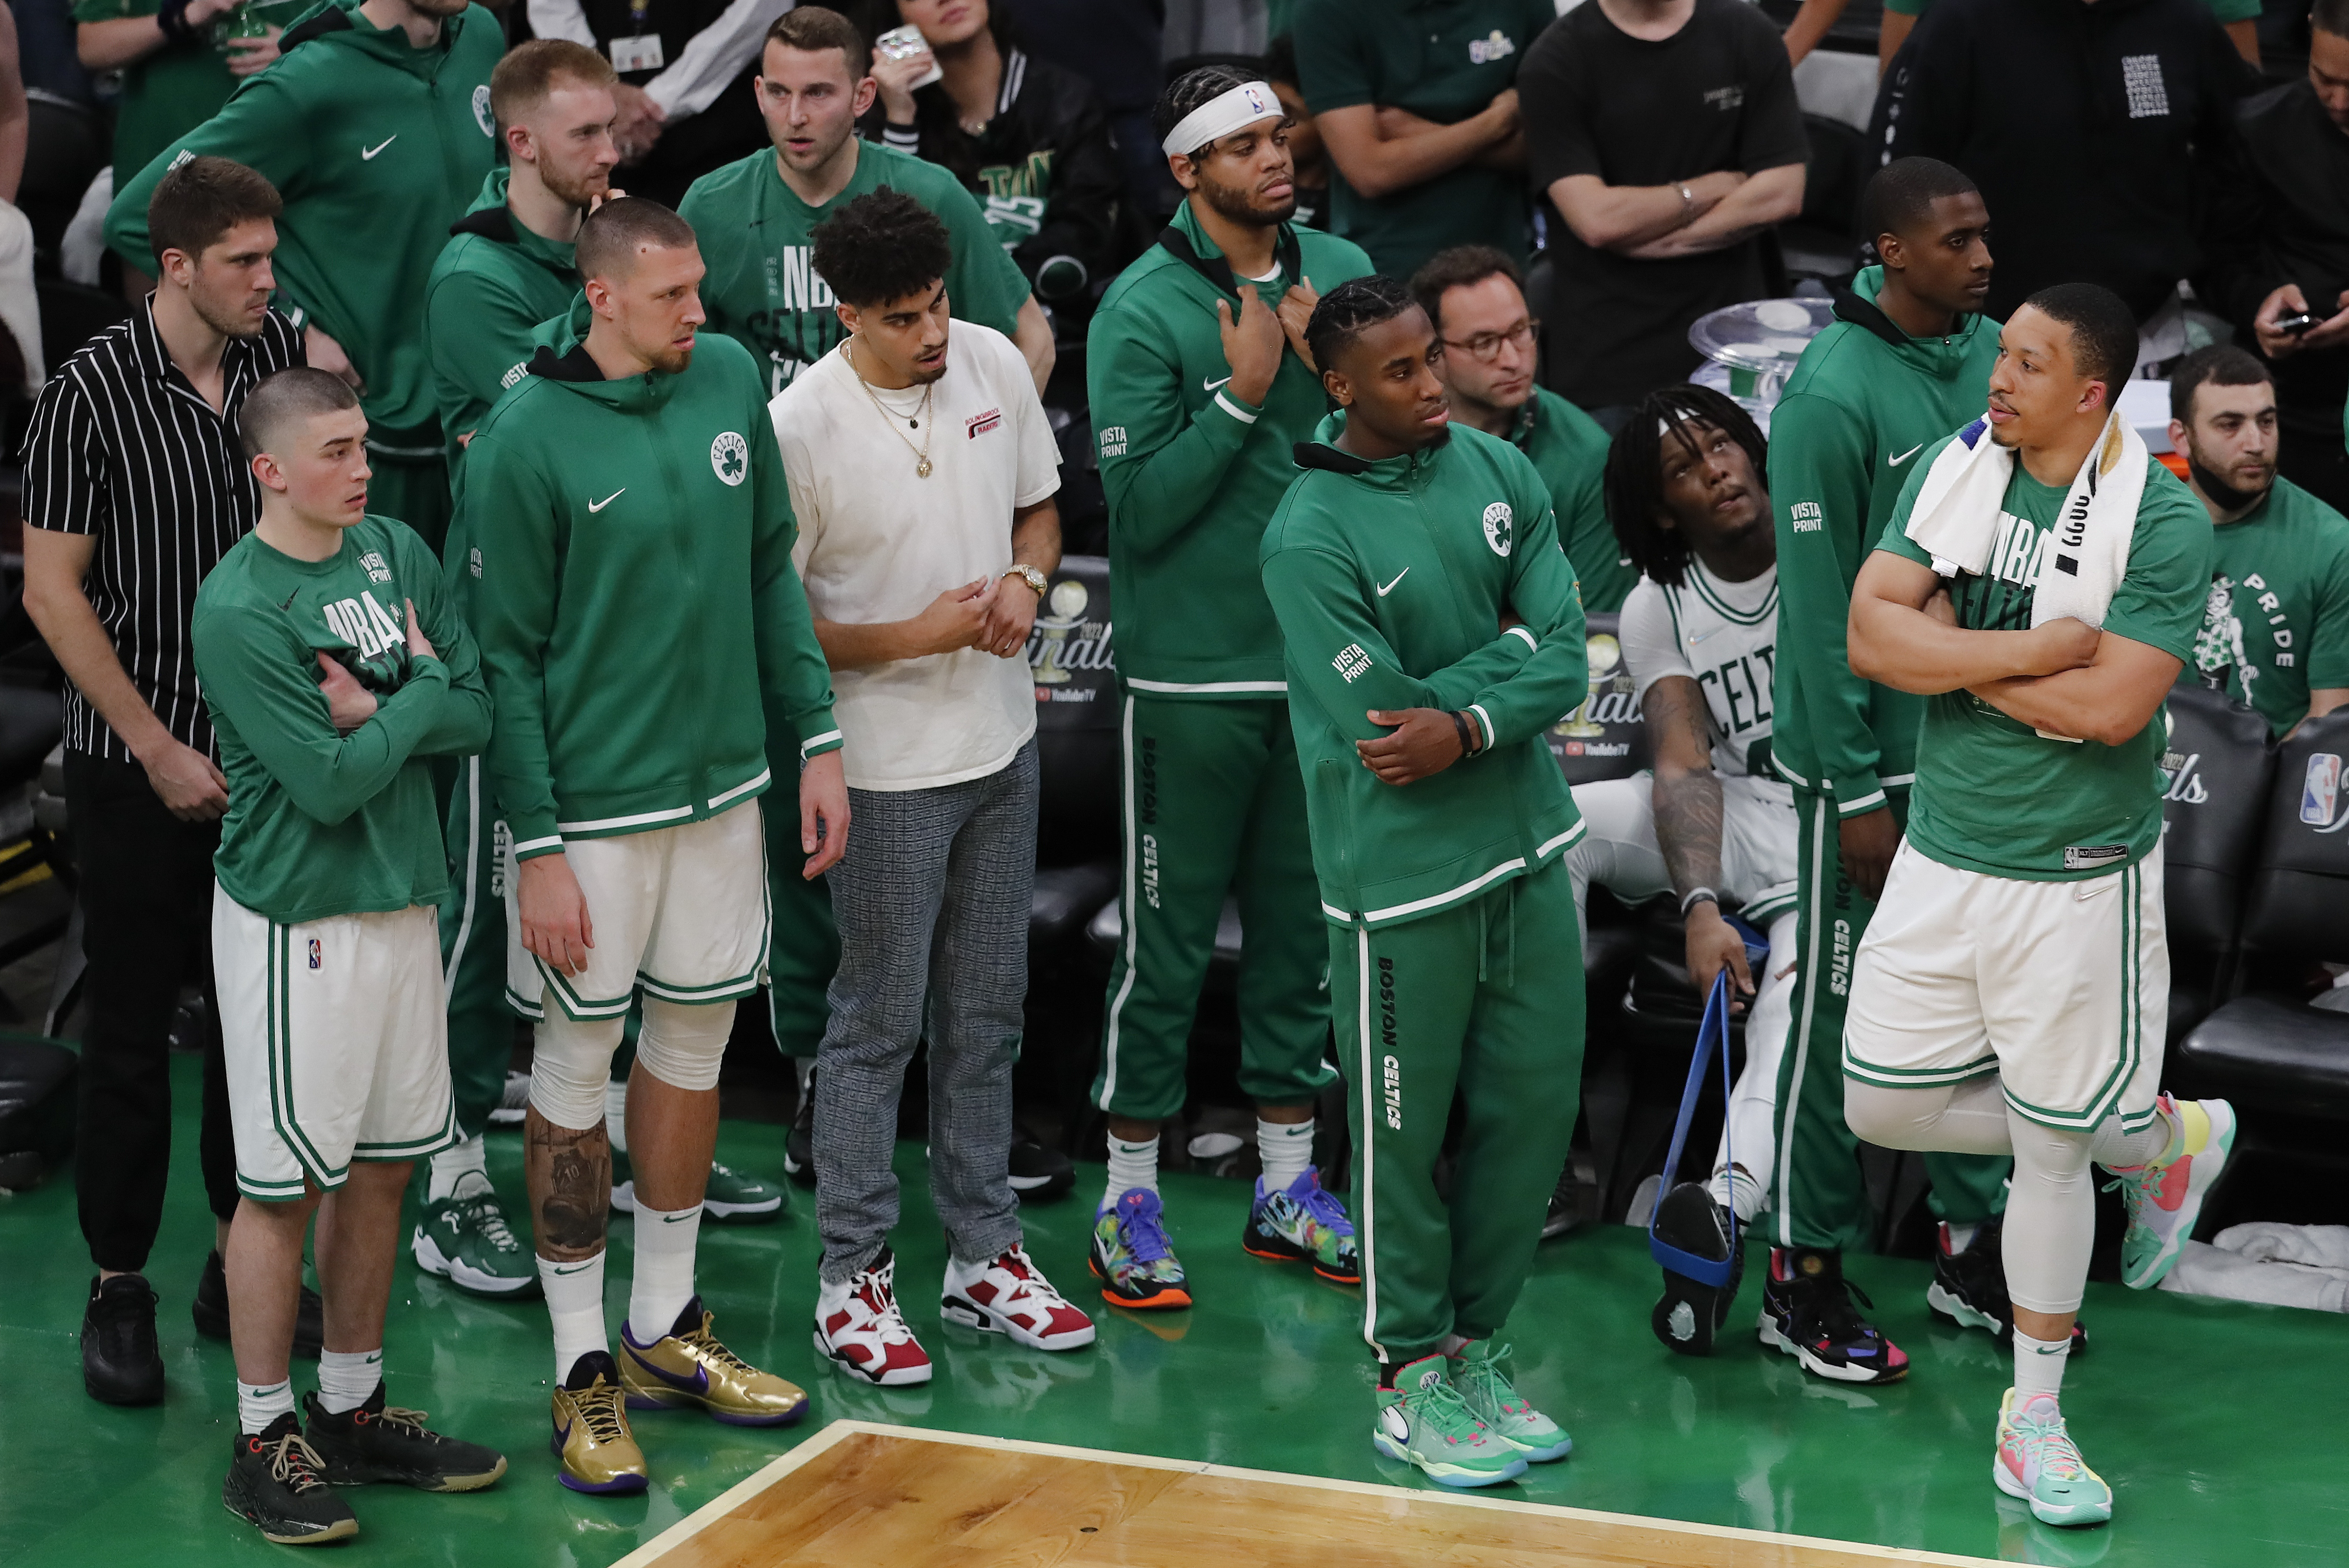 Jaylen Brown said Celtics' loss to Warriors wasn't the same as NBA